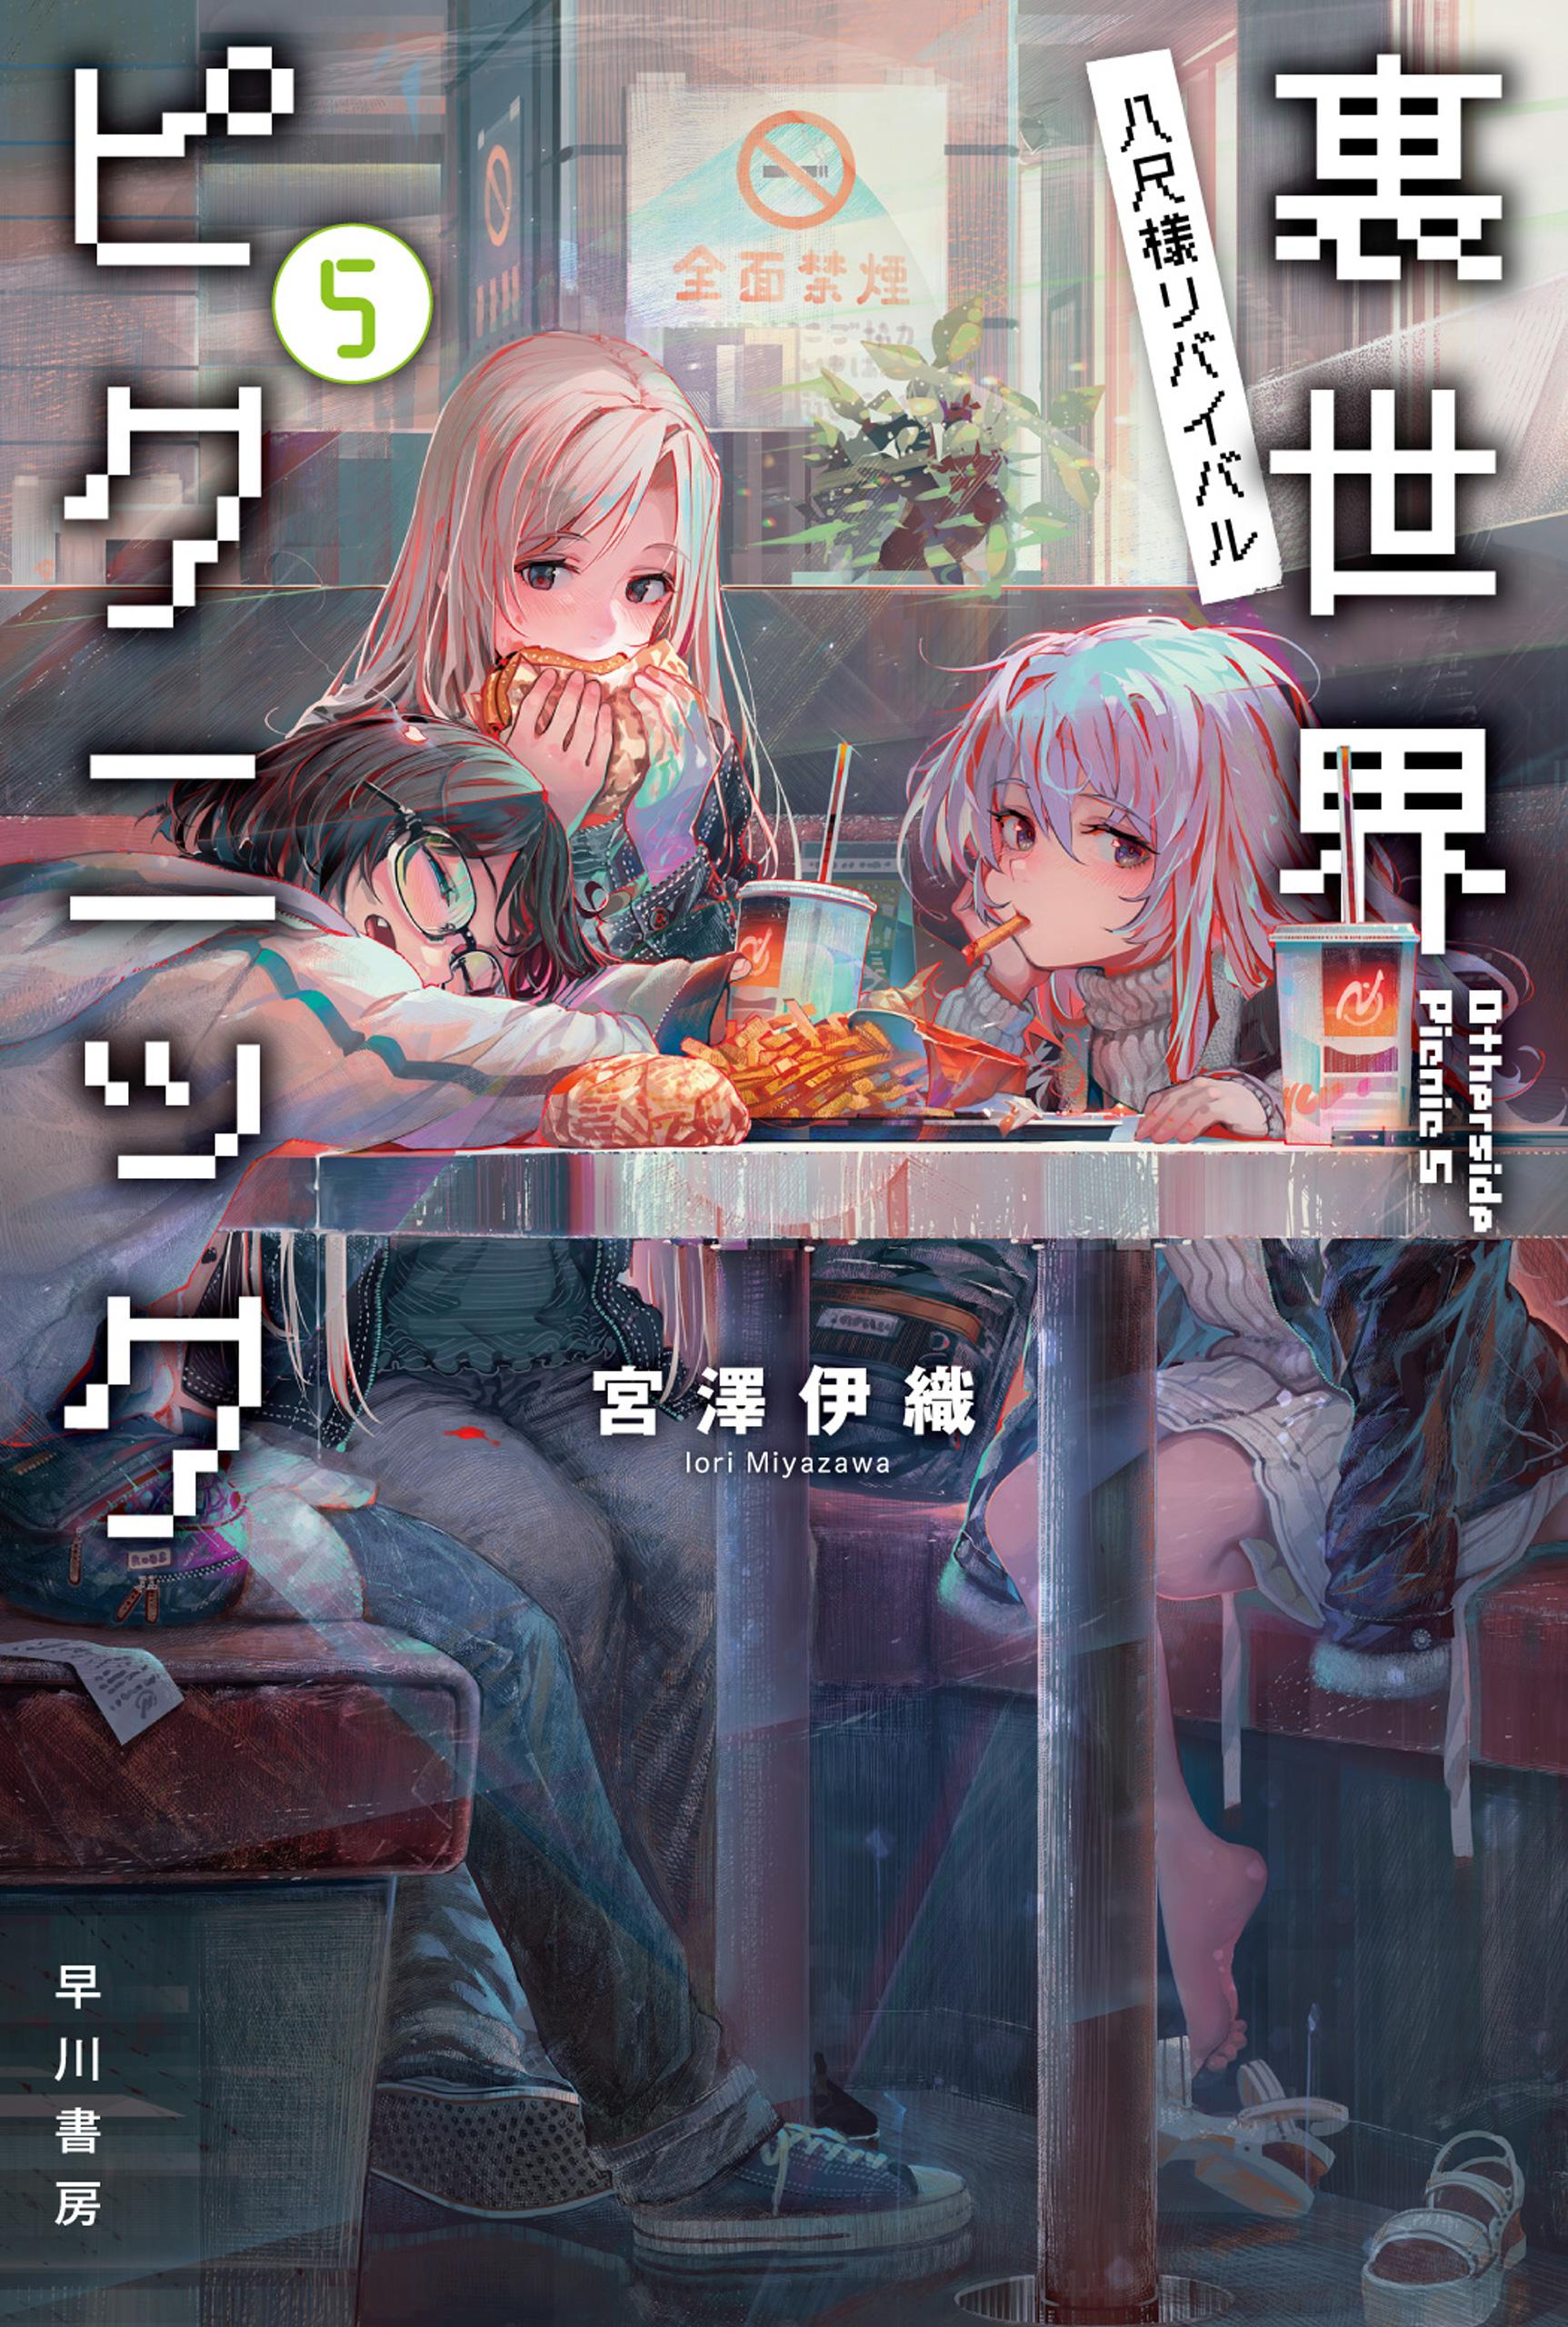 Urasekai Picnic - Manga adaptation, Urasekai Picnic (Otherside